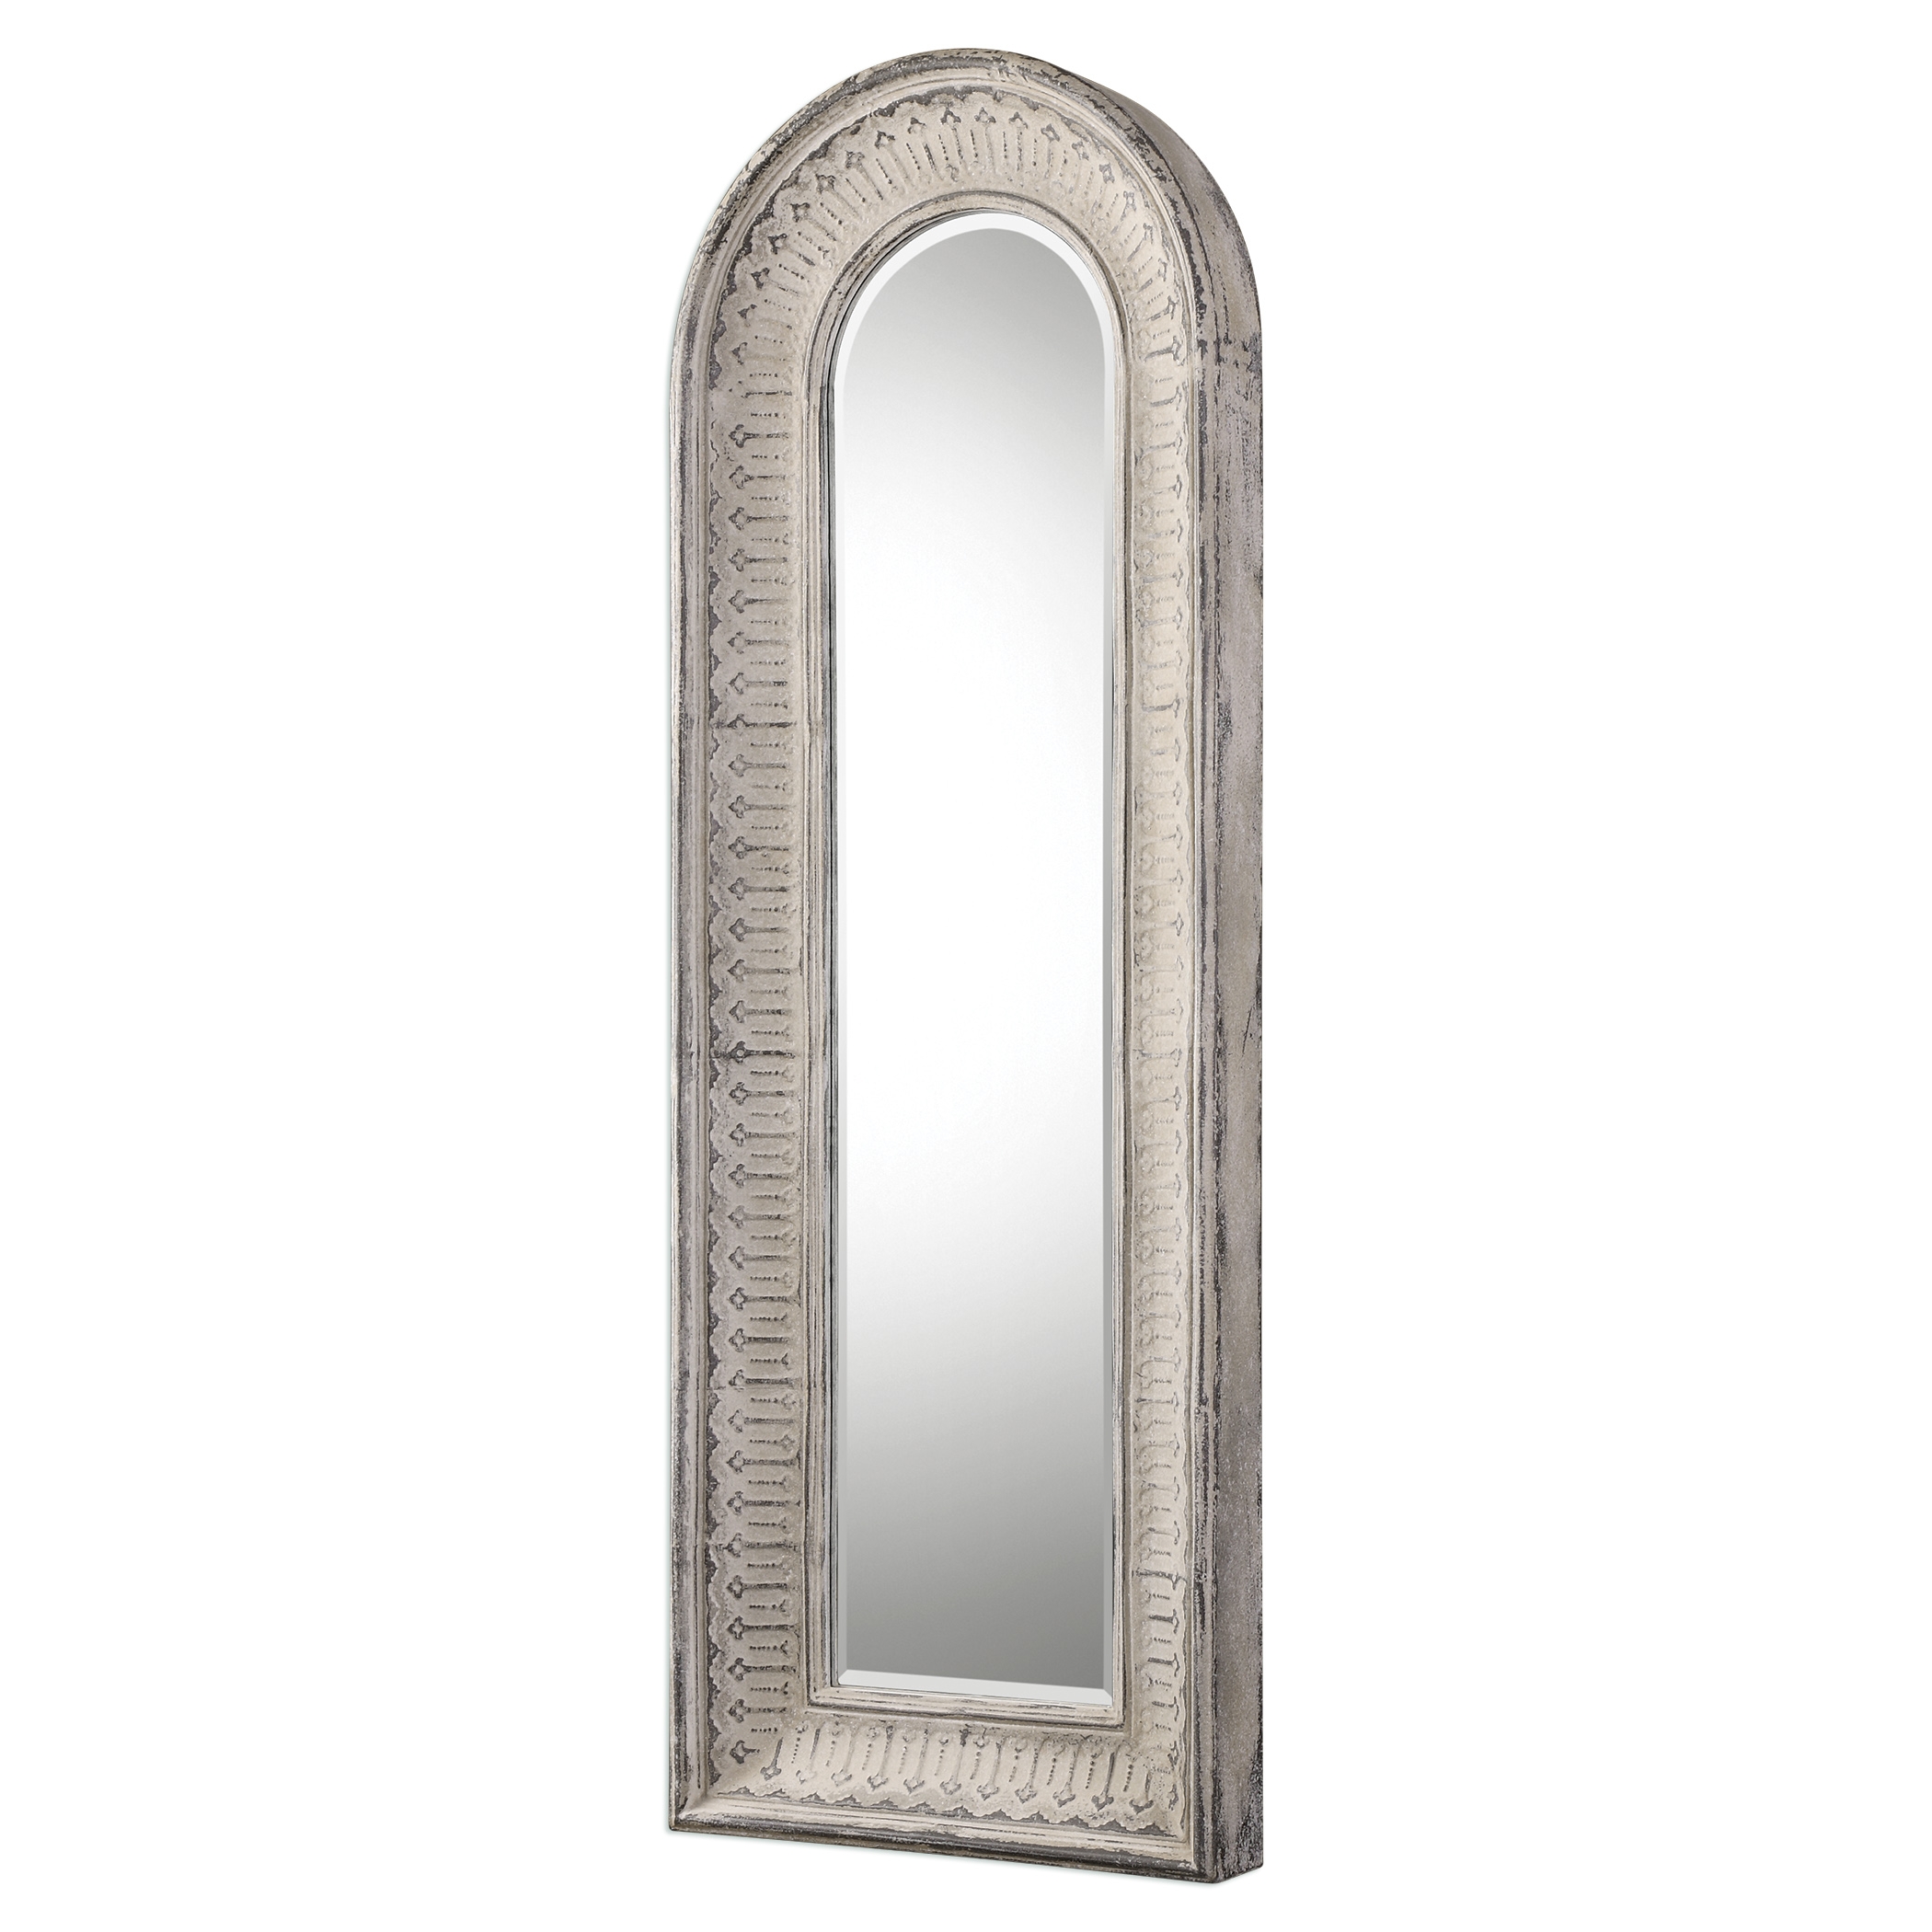 Argenton Aged Gray Arch Mirror - Image 1